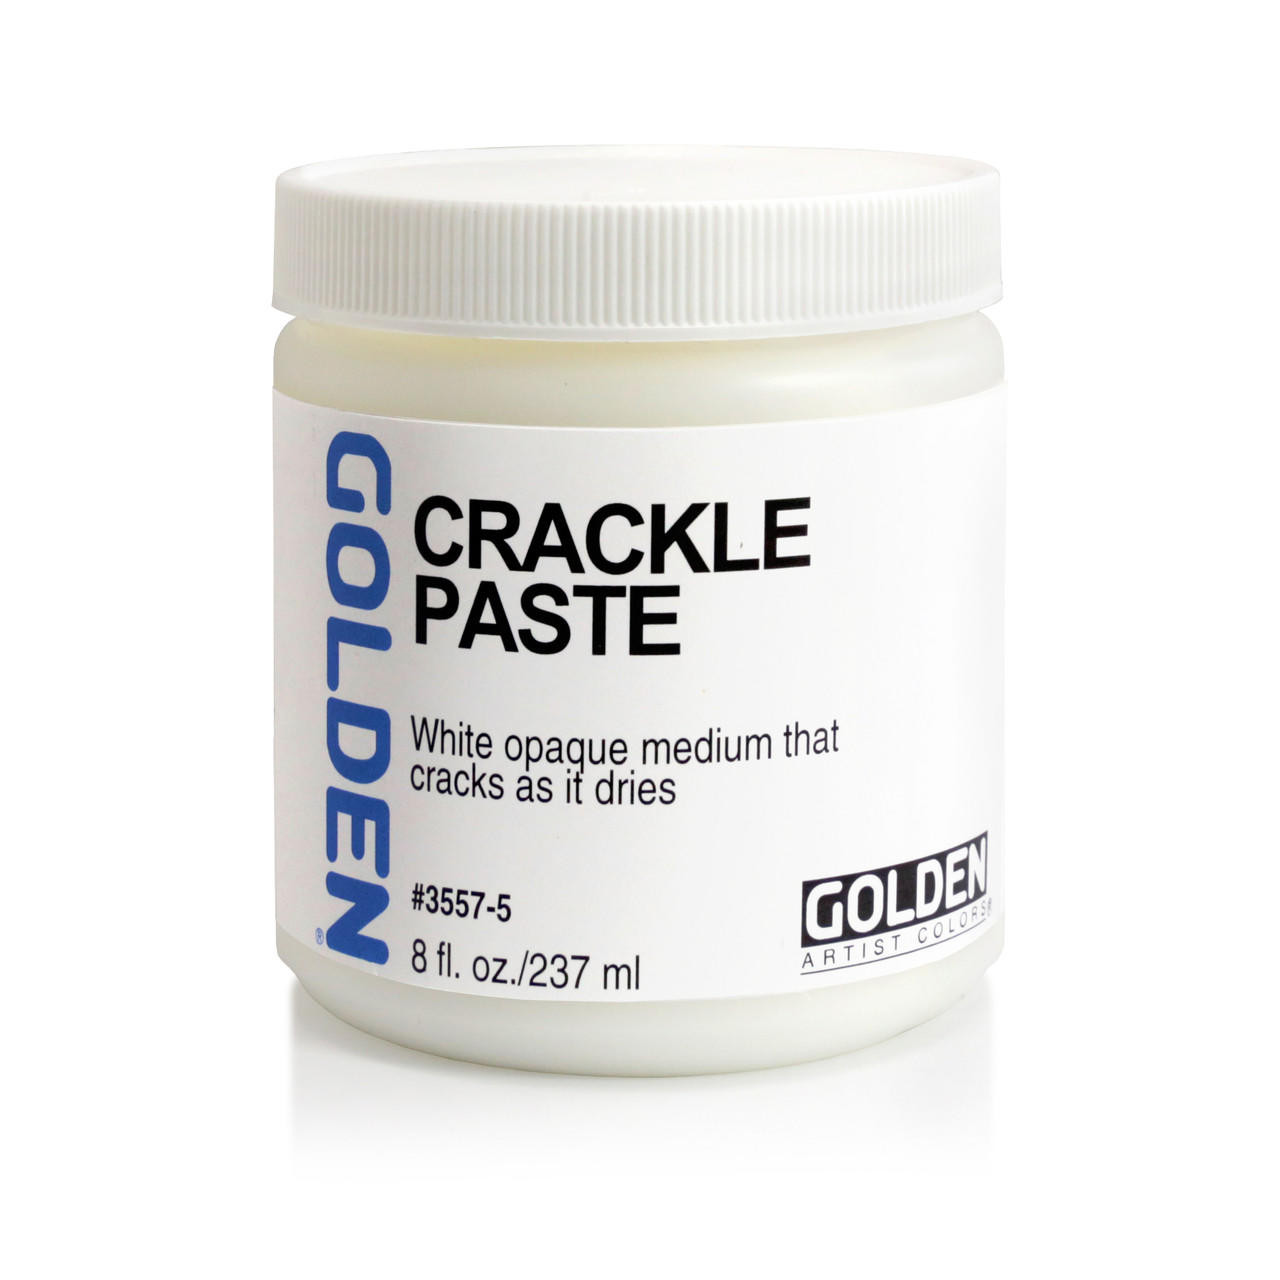 Golden Crackle Paste 237ml